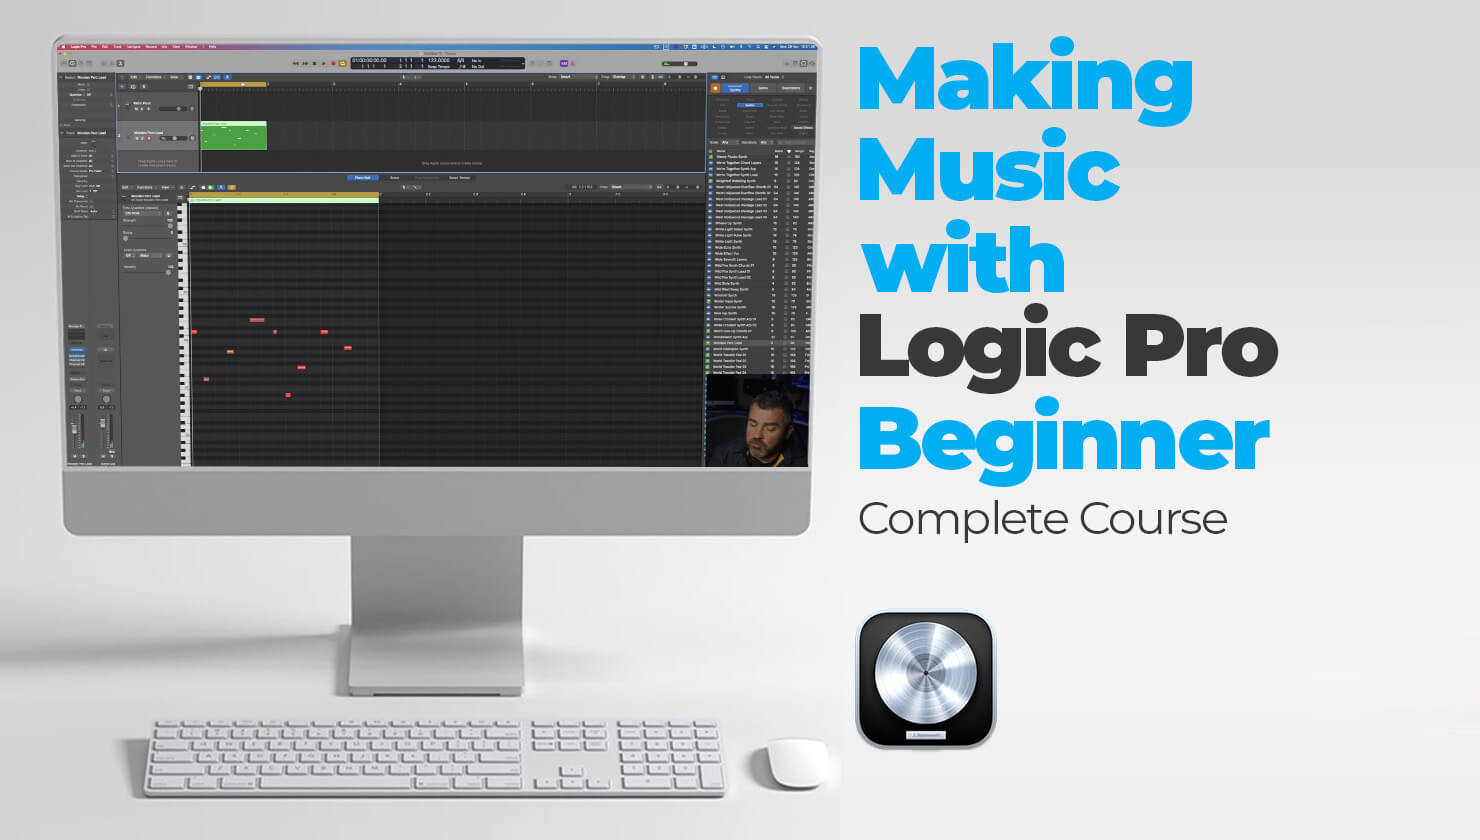 Making Music with Logic Pro: Beginner